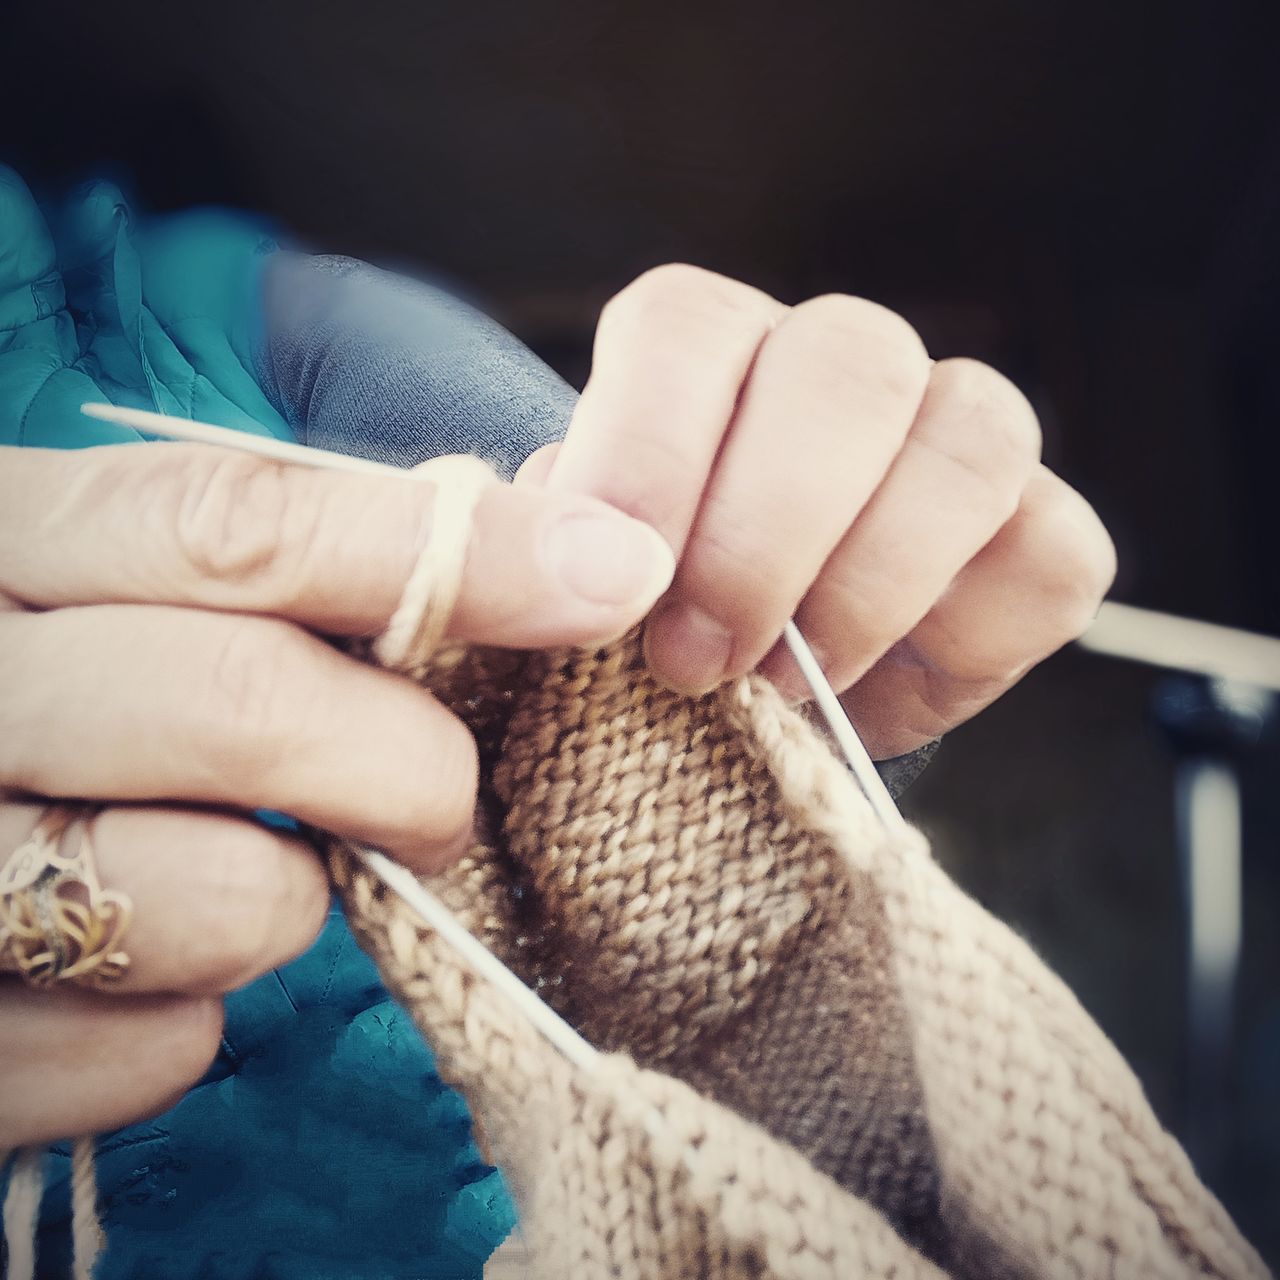 Knitting handcraft skill needlework